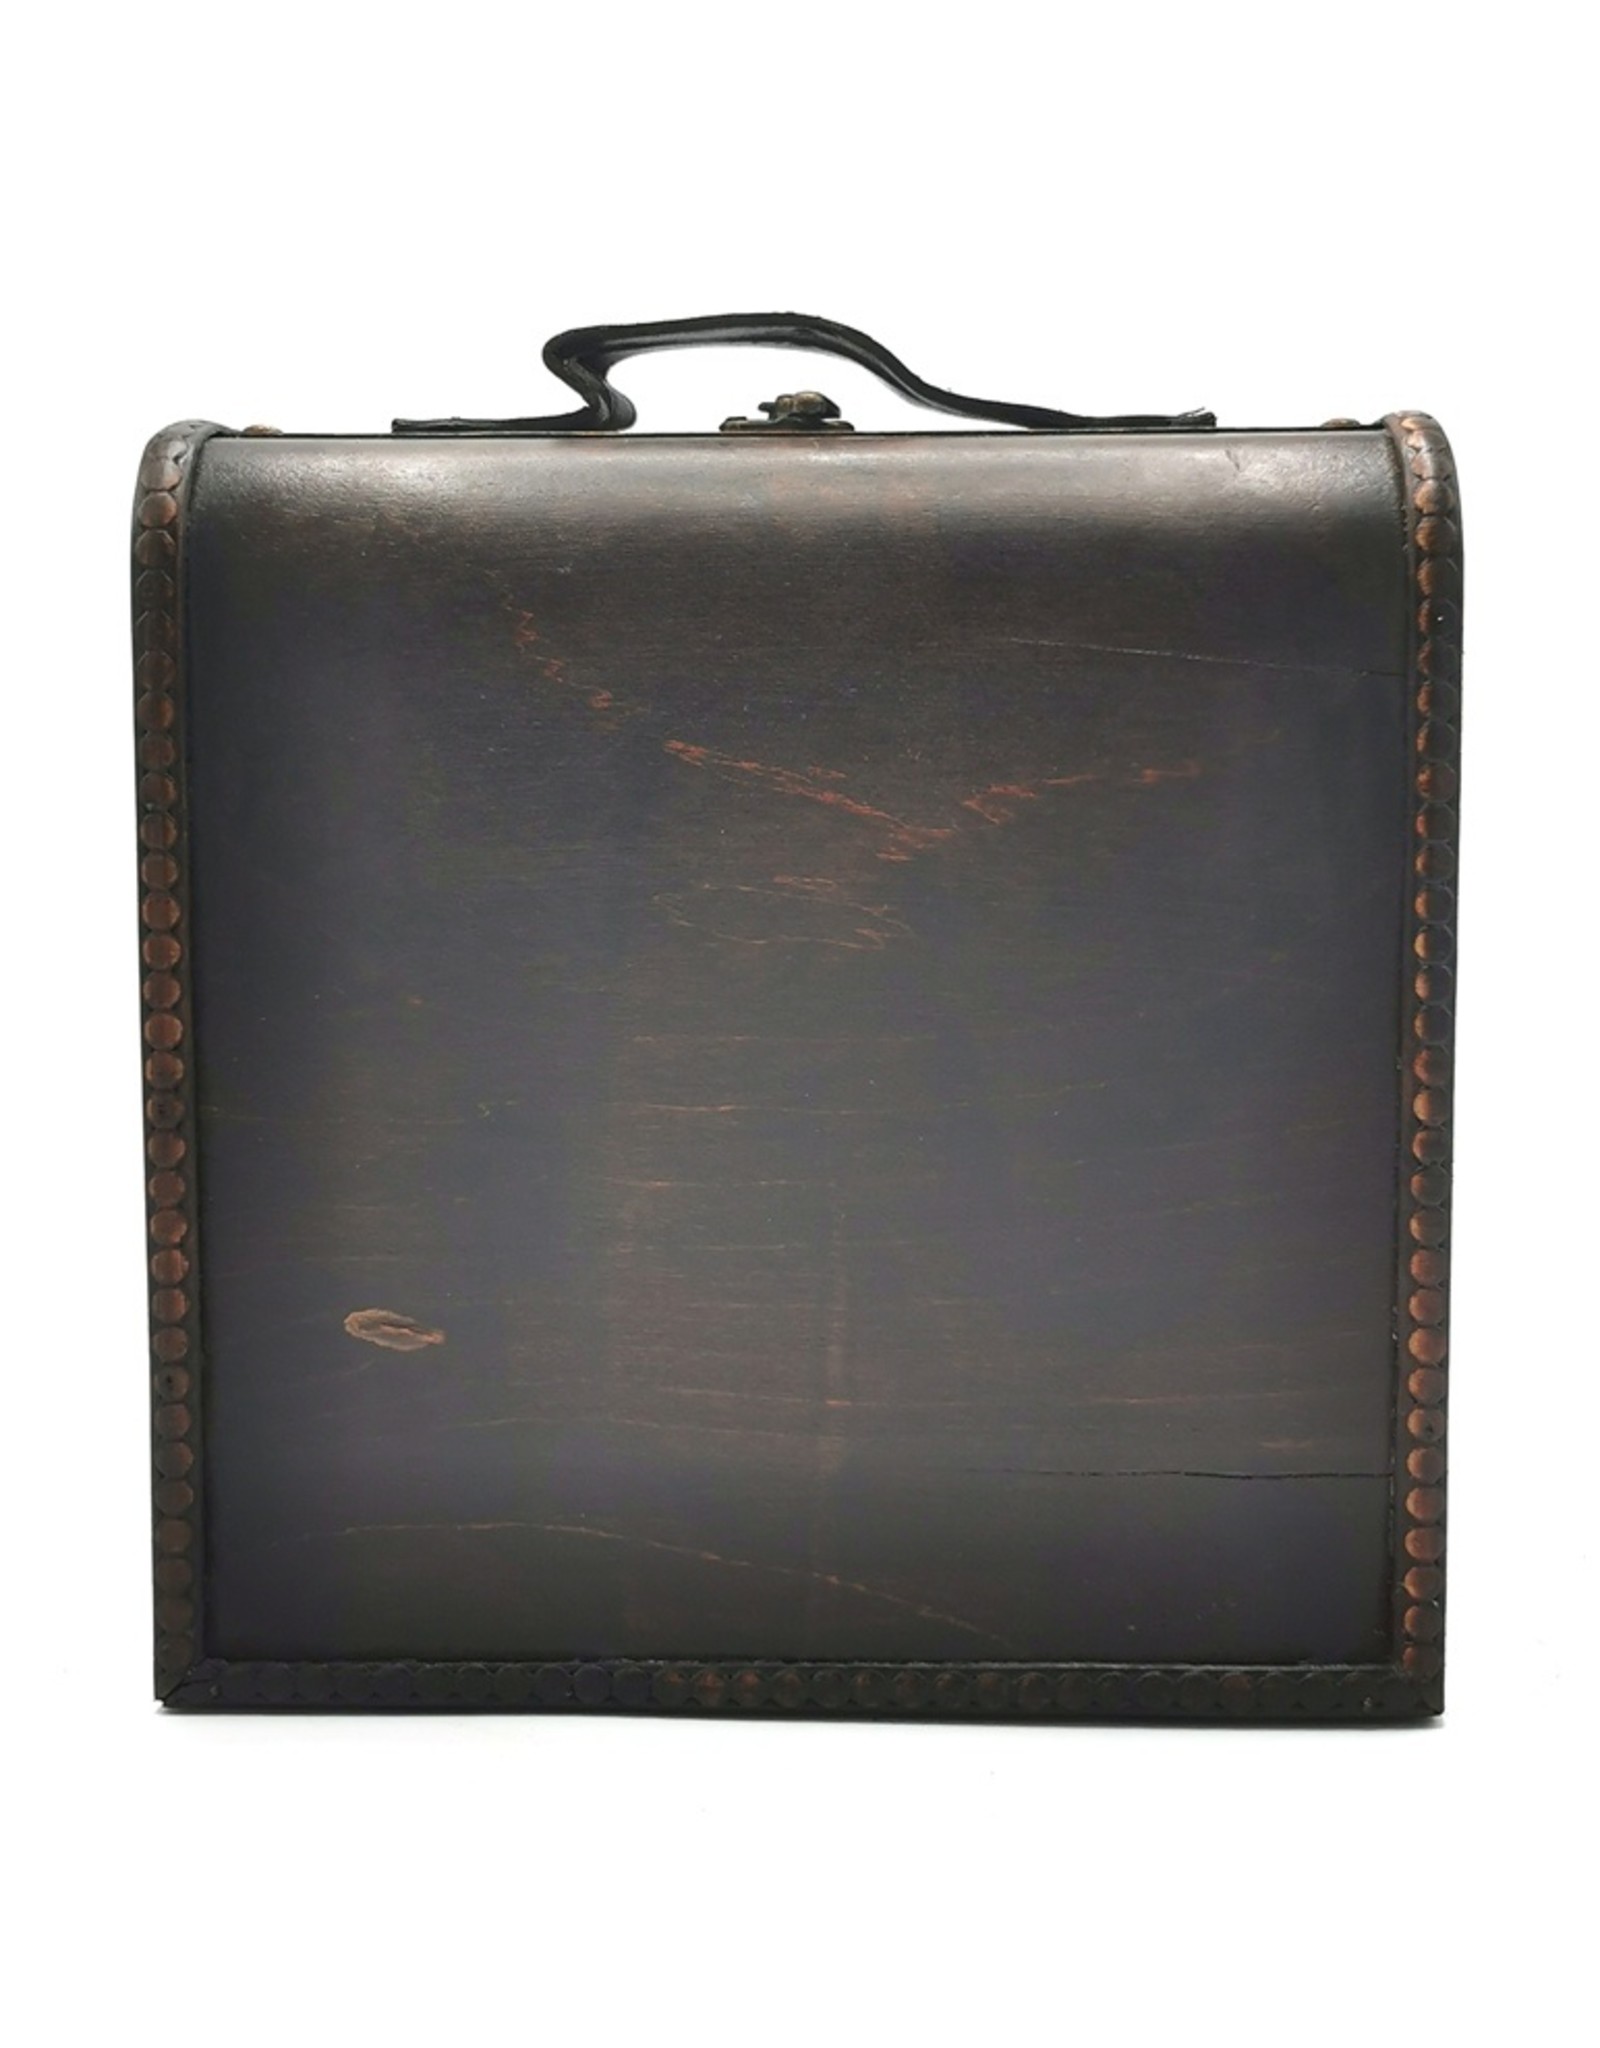 Trukado Miscellaneous - Wooden Suitcase Steampunk - Victorian M 27x26.5x10.5cm